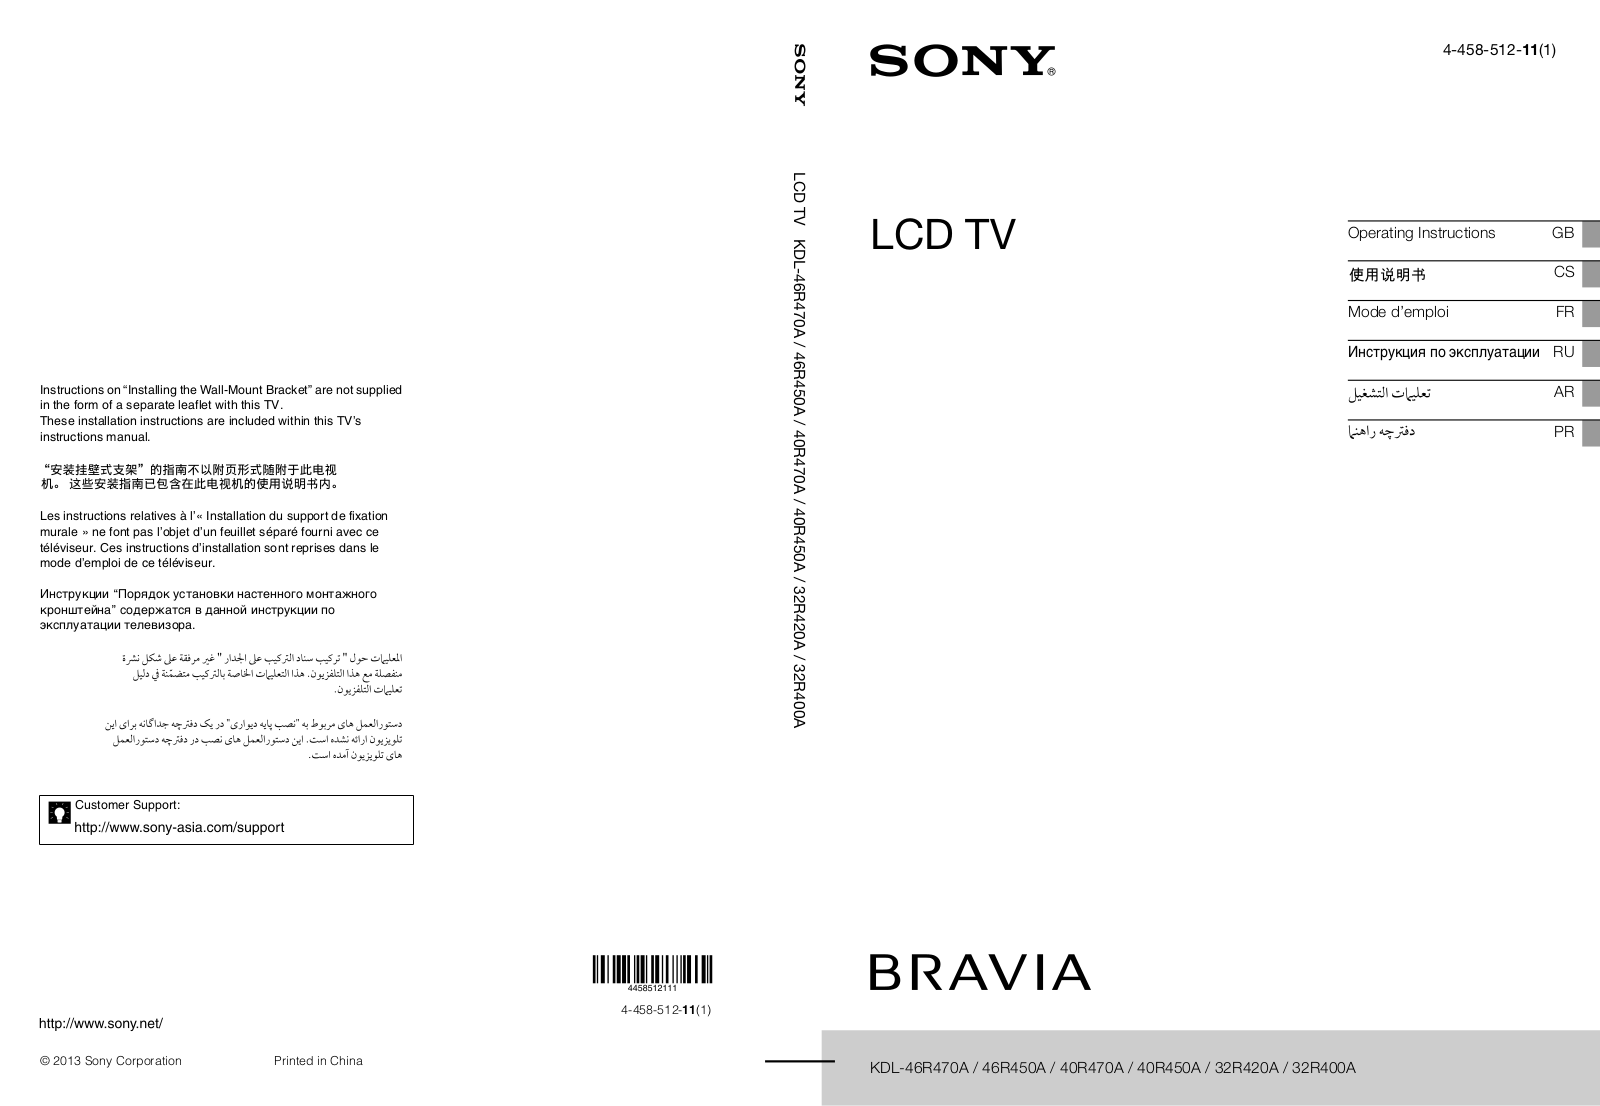 Sony BRAVIA KDL-32R420A, BRAVIA KDL-46R470A, BRAVIA KDL-46R450A, BRAVIA KDL-40R470A, BRAVIA KDL-40R450A Operating Instructions Manual